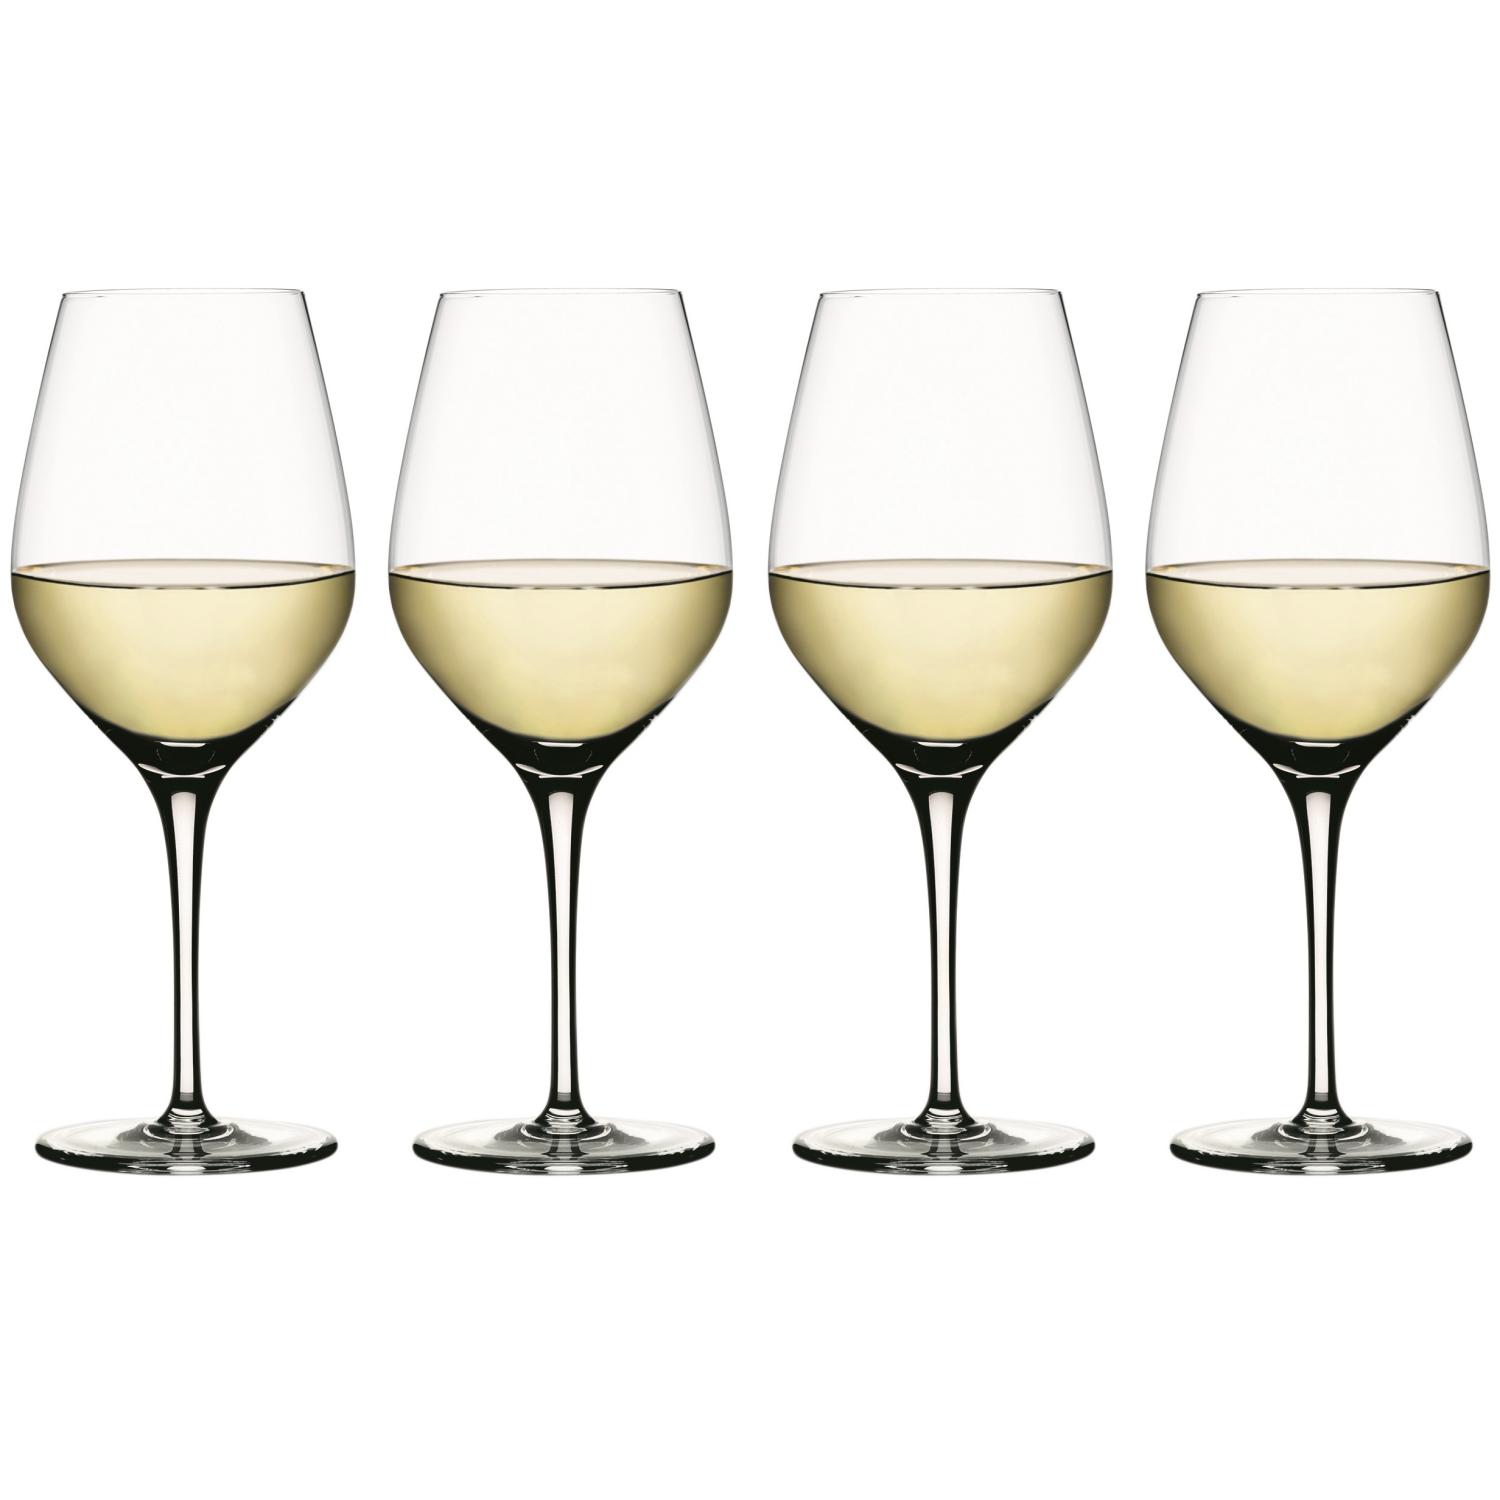 4 бокала для белого вина Spiegelau Authentis White Wine Small 360 мл (арт. 4400183)